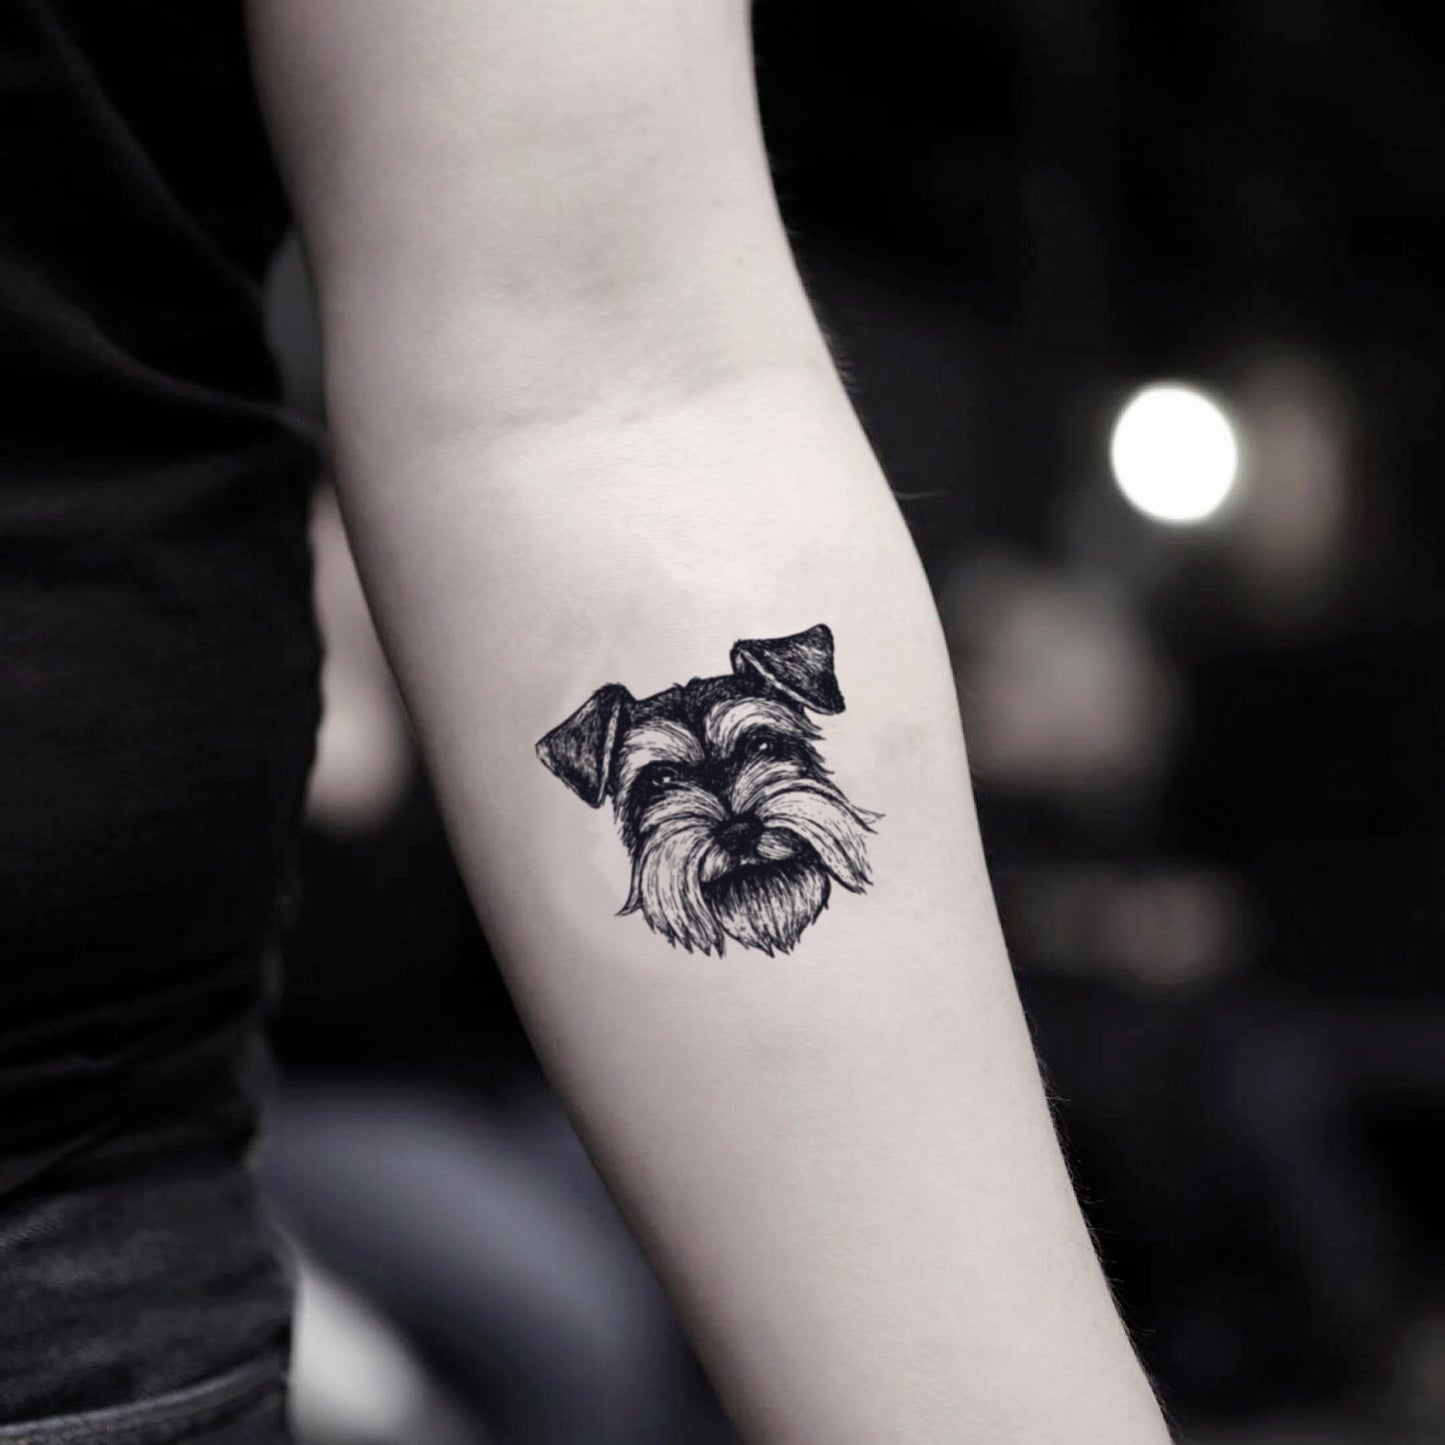 fake small schnauzer yorkshire terrier dog animal temporary tattoo sticker design idea on inner arm